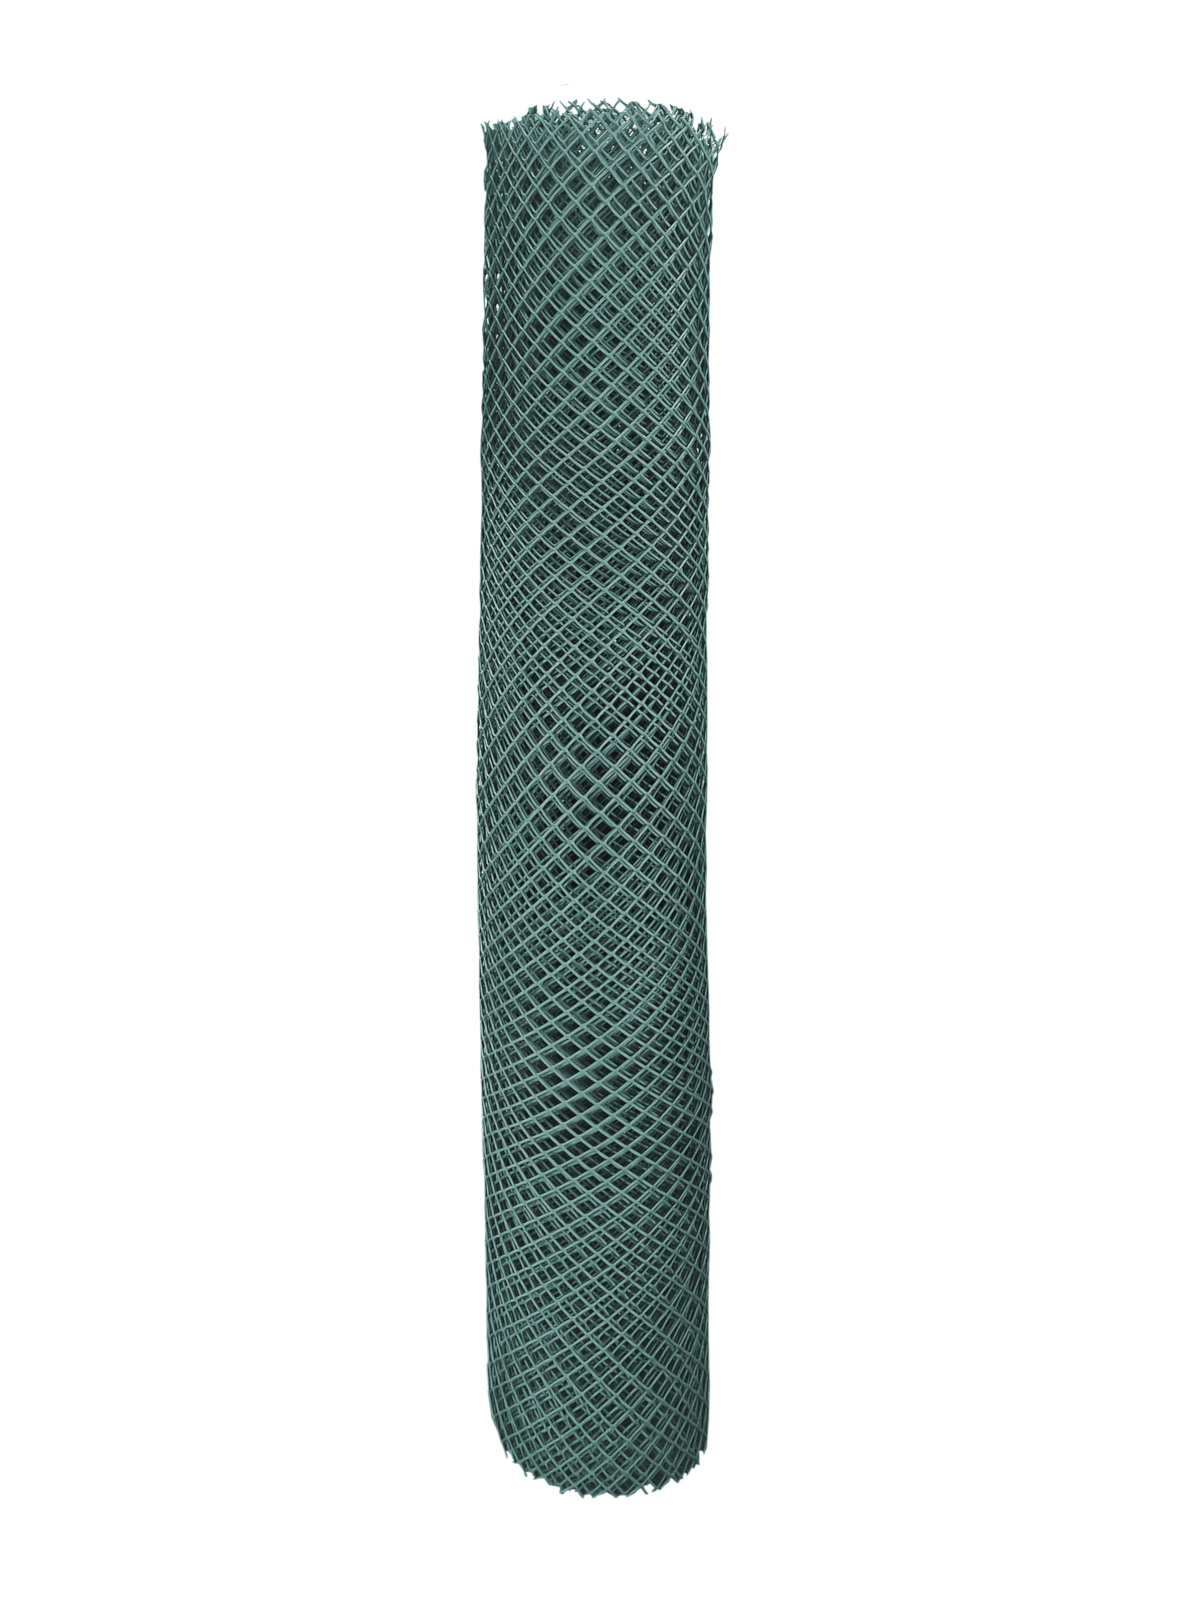 Celoplastové pletivo, oko 17x17mm, výška 125cm POLYNET, bm PLOTY Sklad5 6395 50 8595068446287